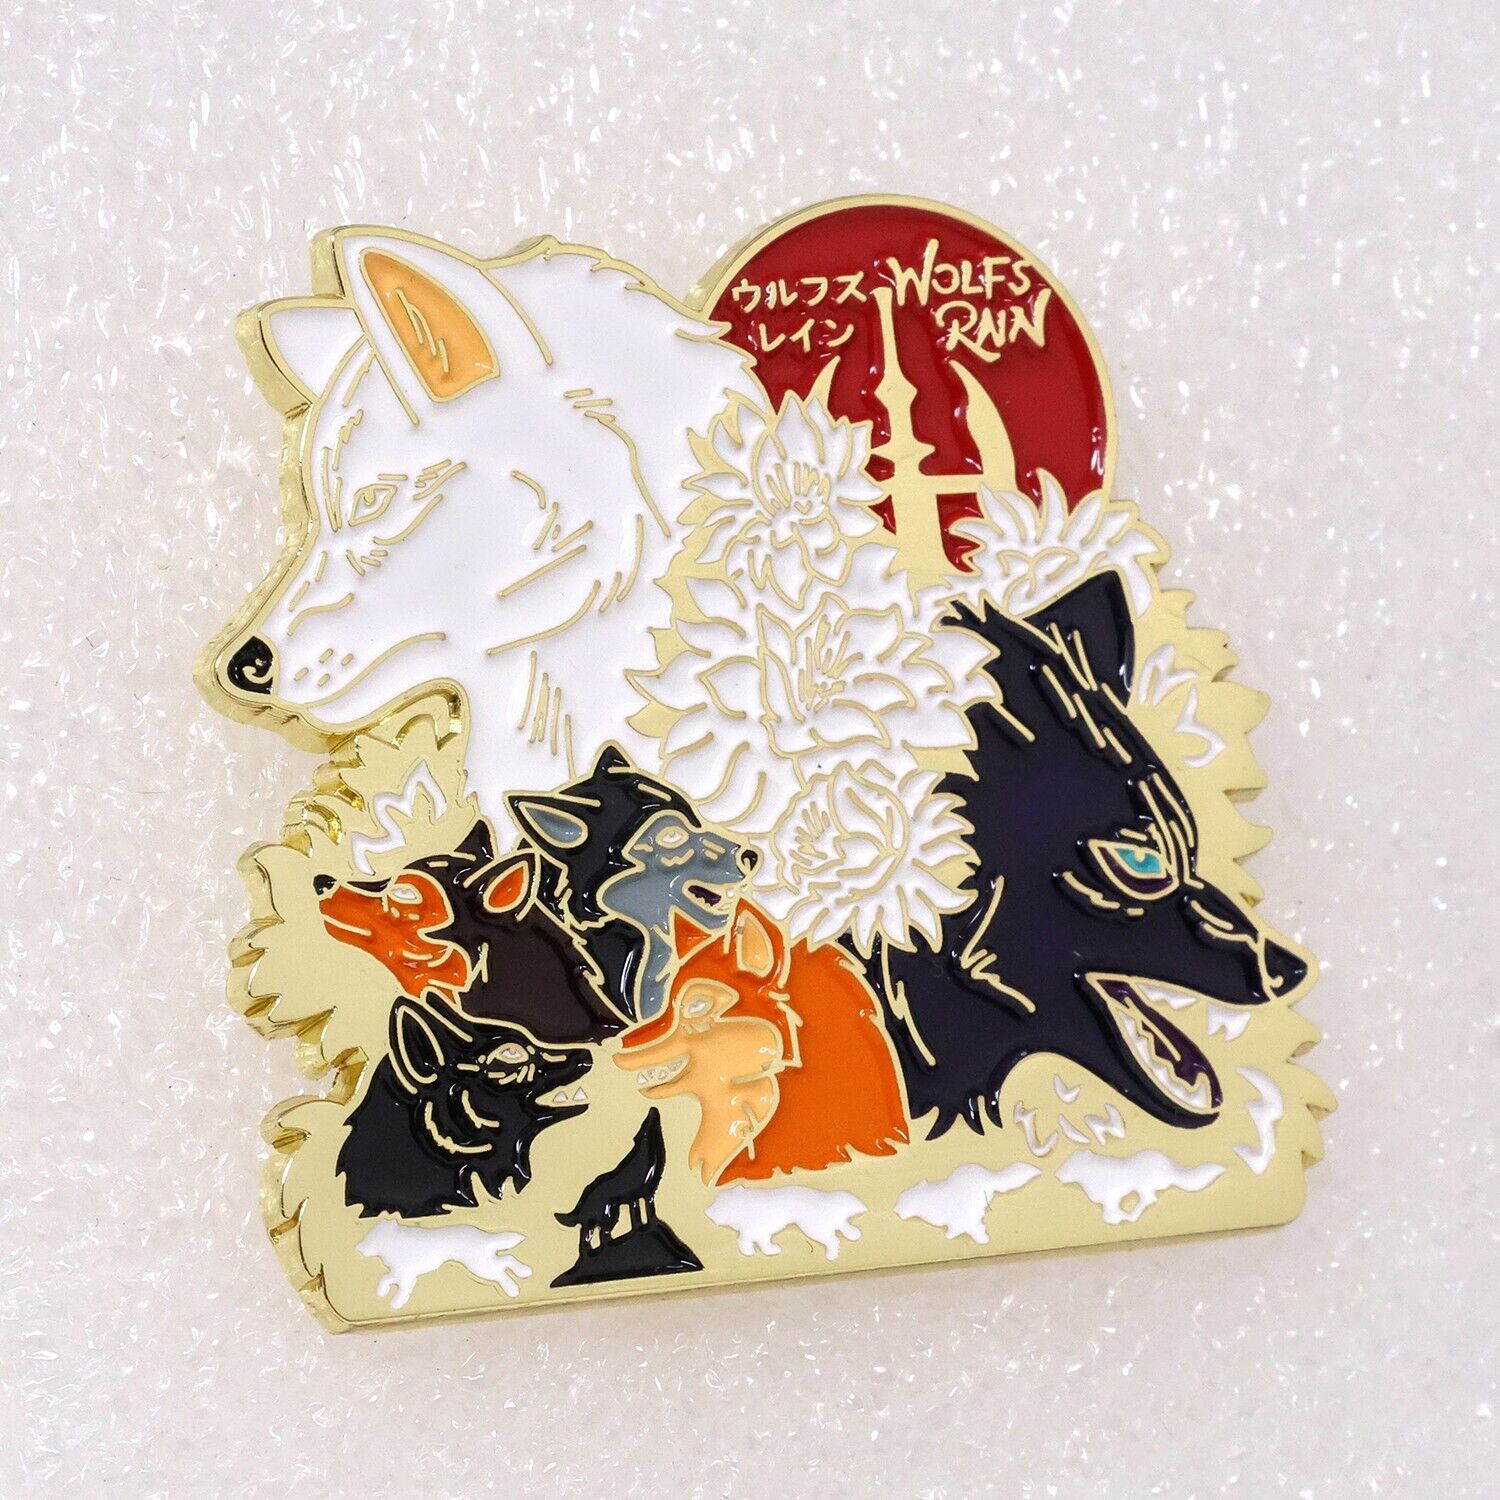 Wolf's Rain Golden Enamel Pin Badge Brooch Collectible Anime Figure